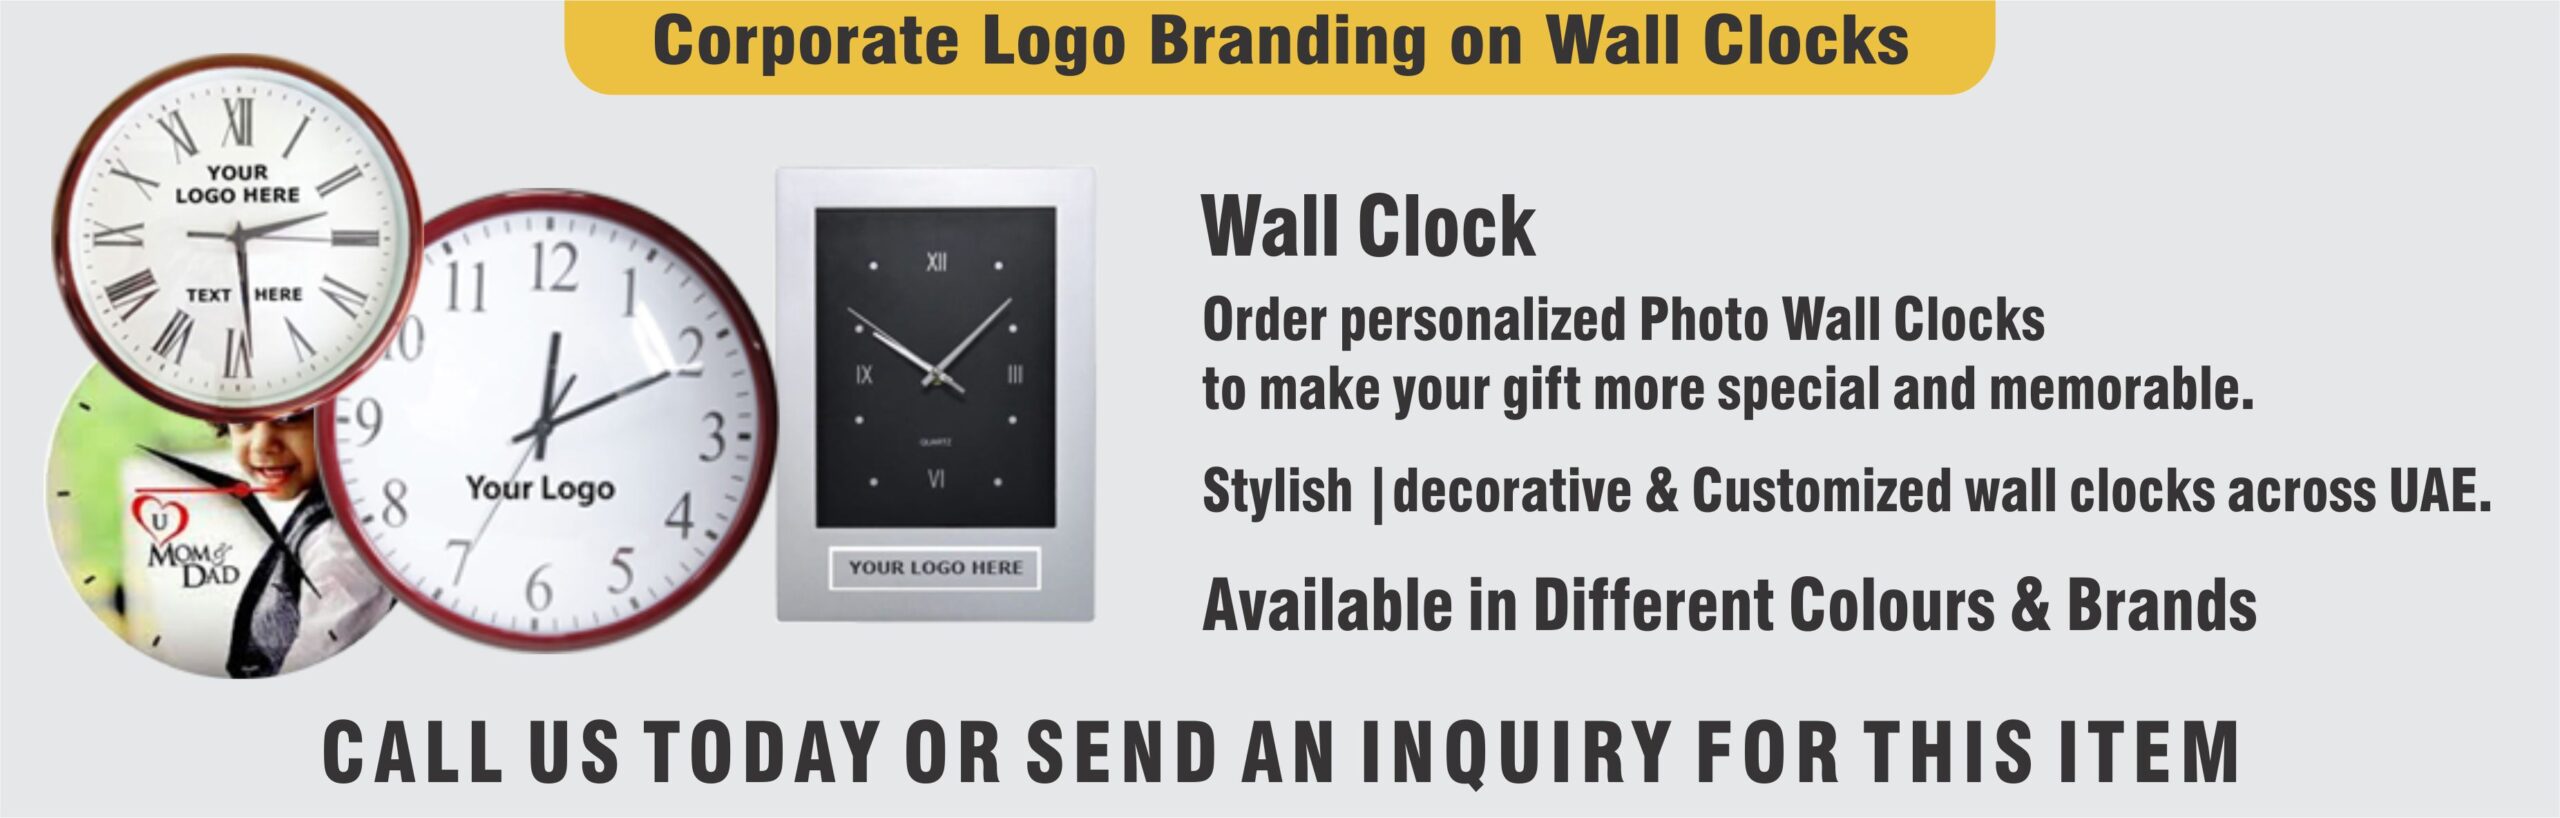 Wall Clock,Wall Clocks Printing in Dubai, Personalized wall clock